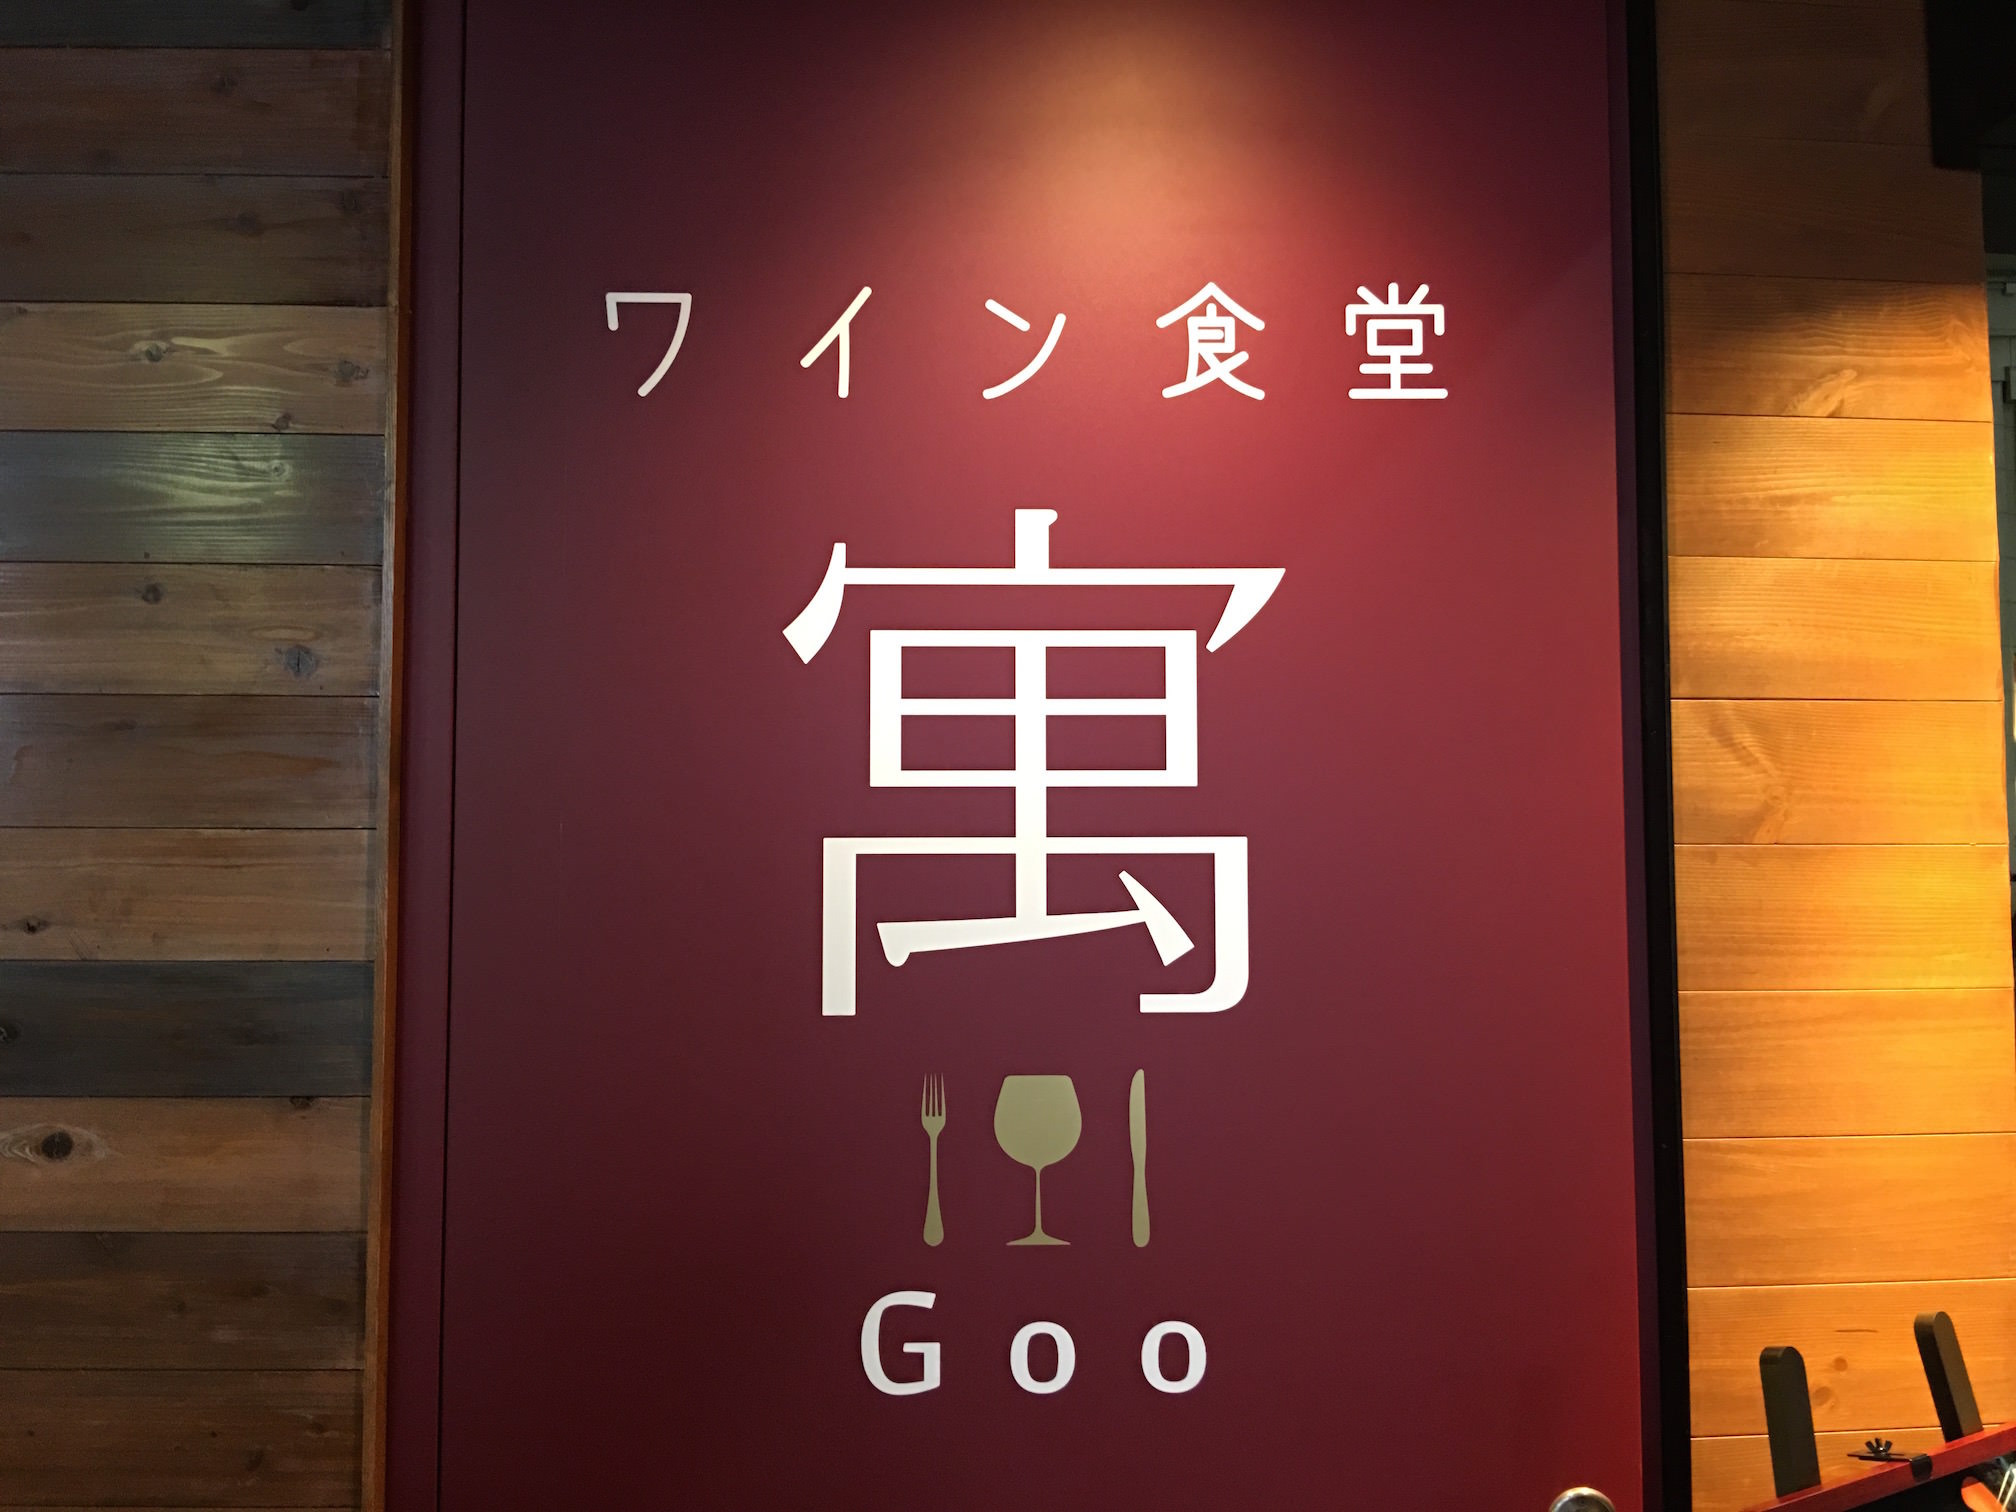 Ginza wine dining goo opening reception 2